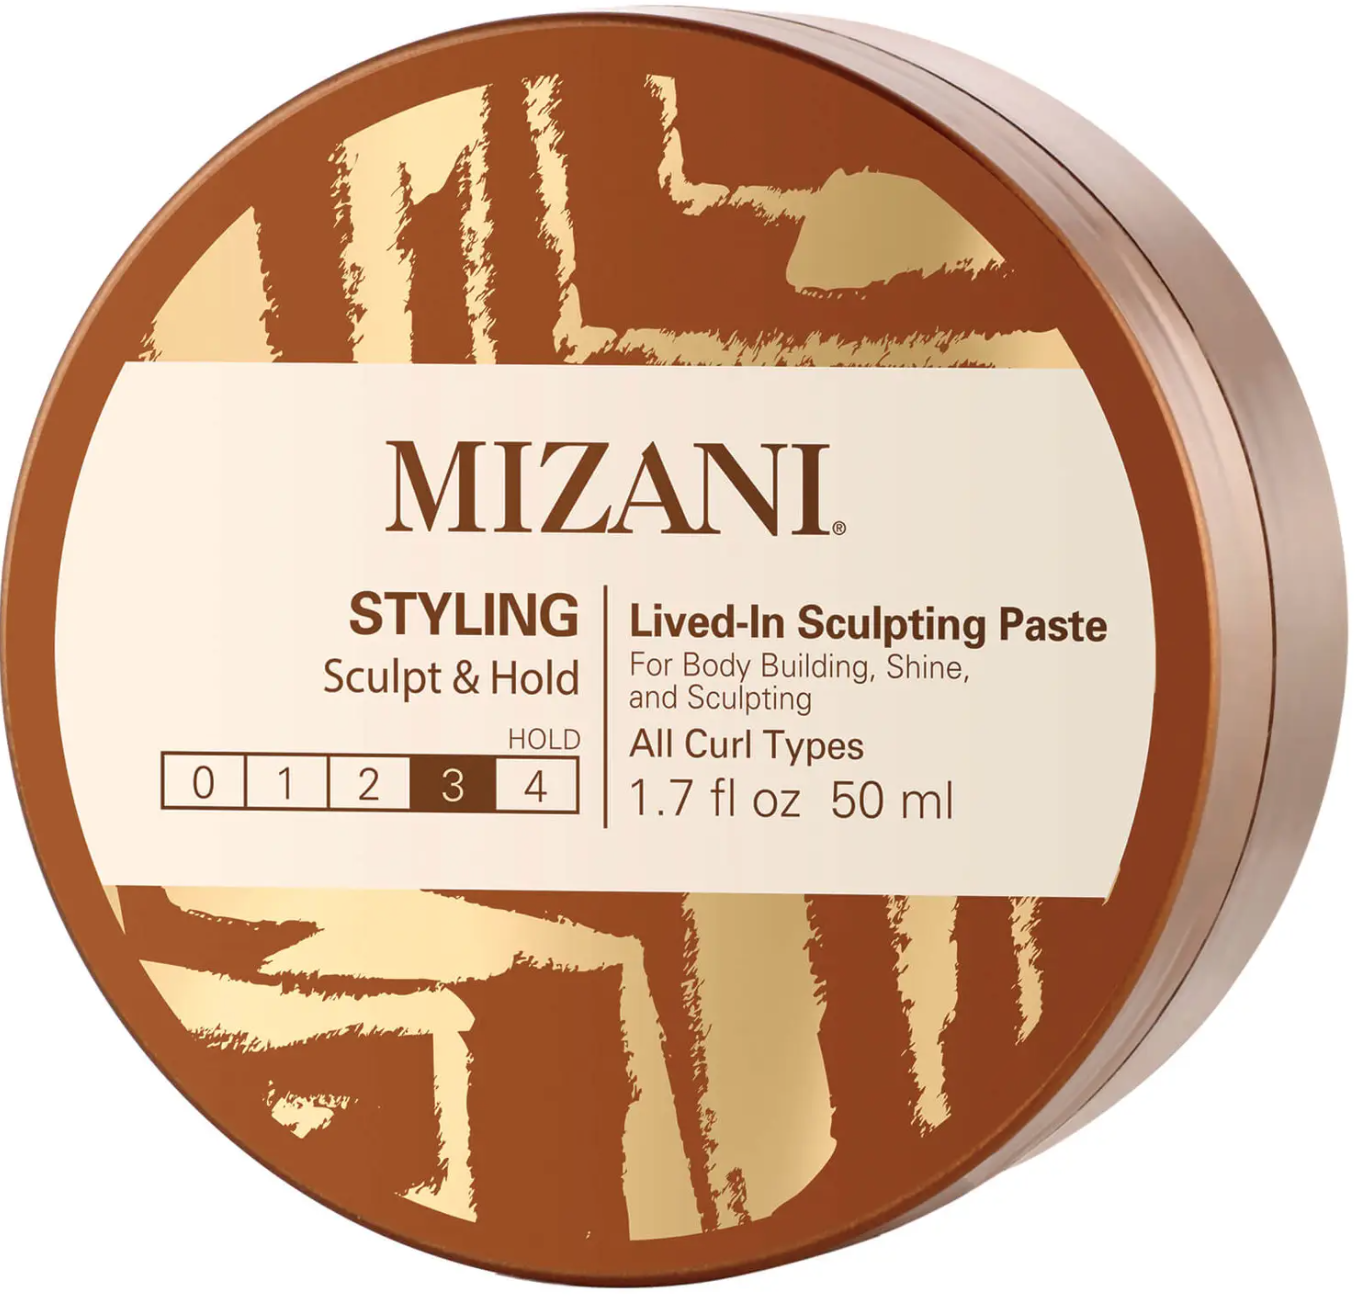 Mizani Lived-In Sculpting Paste, lookfantastic oferta de primavera